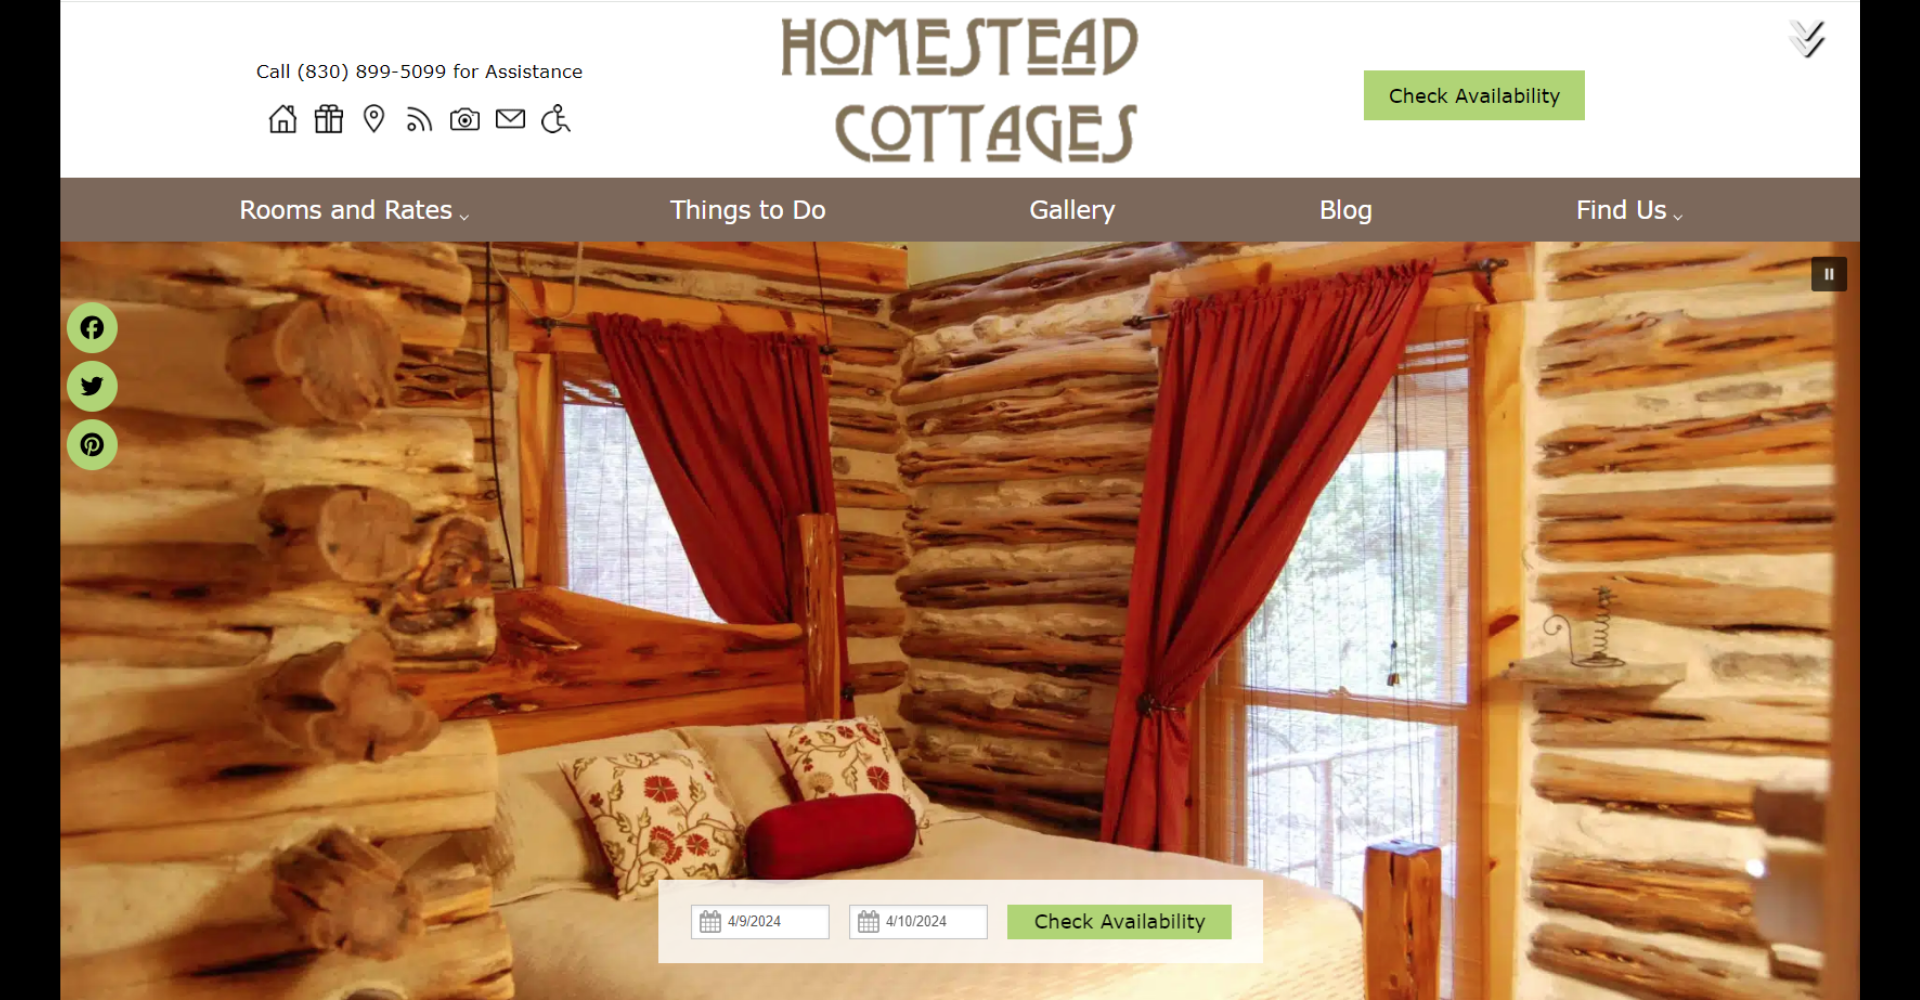 Homepage screenshot of Homestead Cottage's website